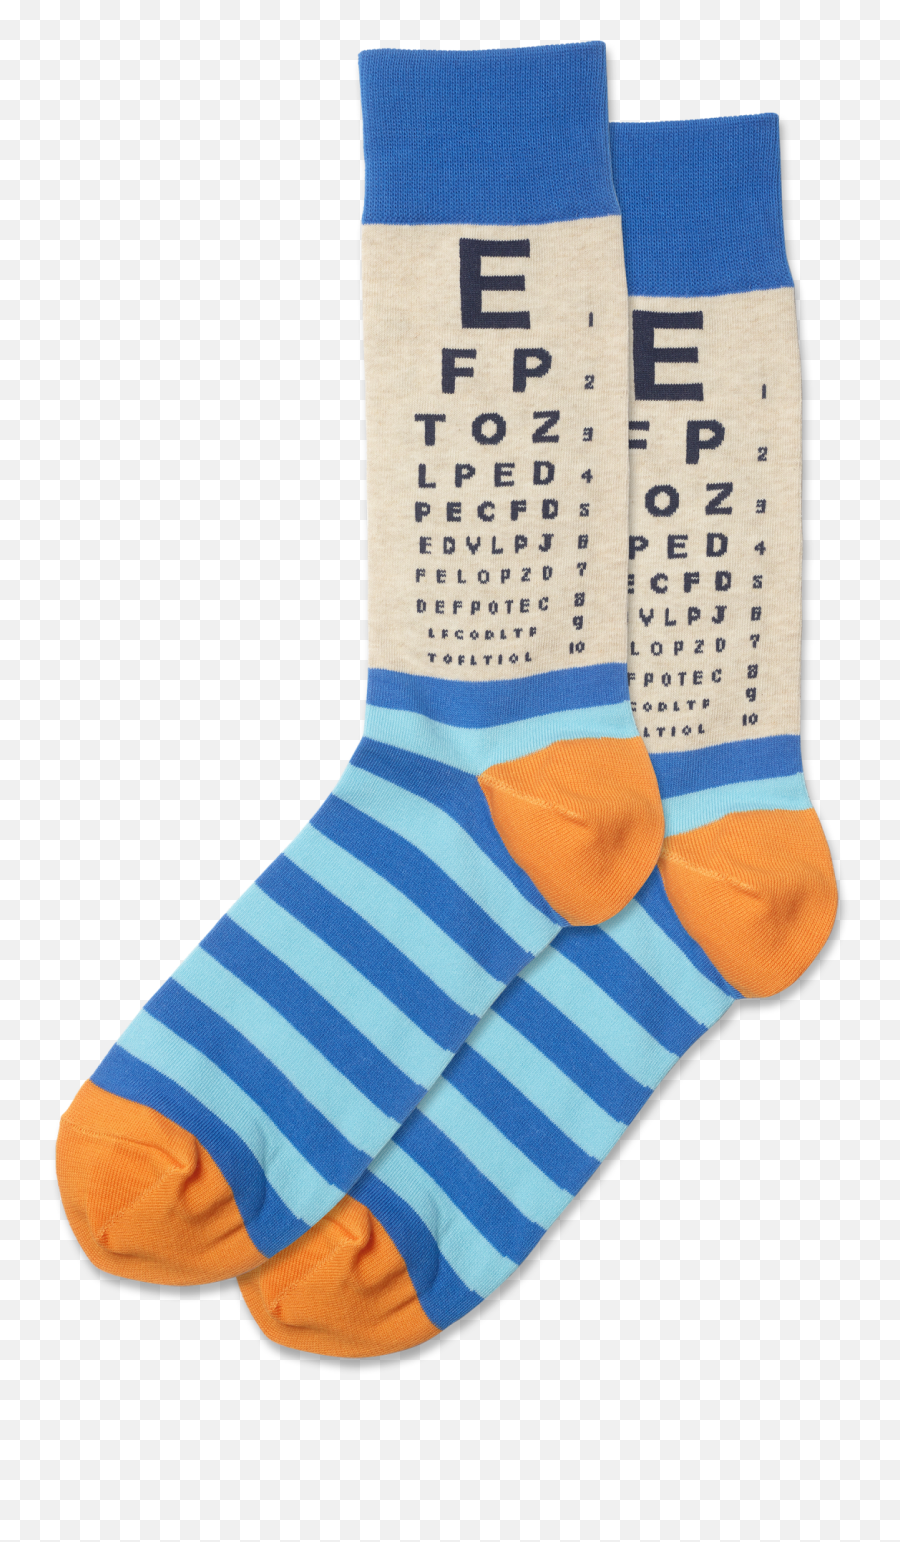 Hot Sox - Eye Chart Natural Melange Hsm10127 Crew Menu0027s Clothing Socks Emoji,Emoji Odd Sox